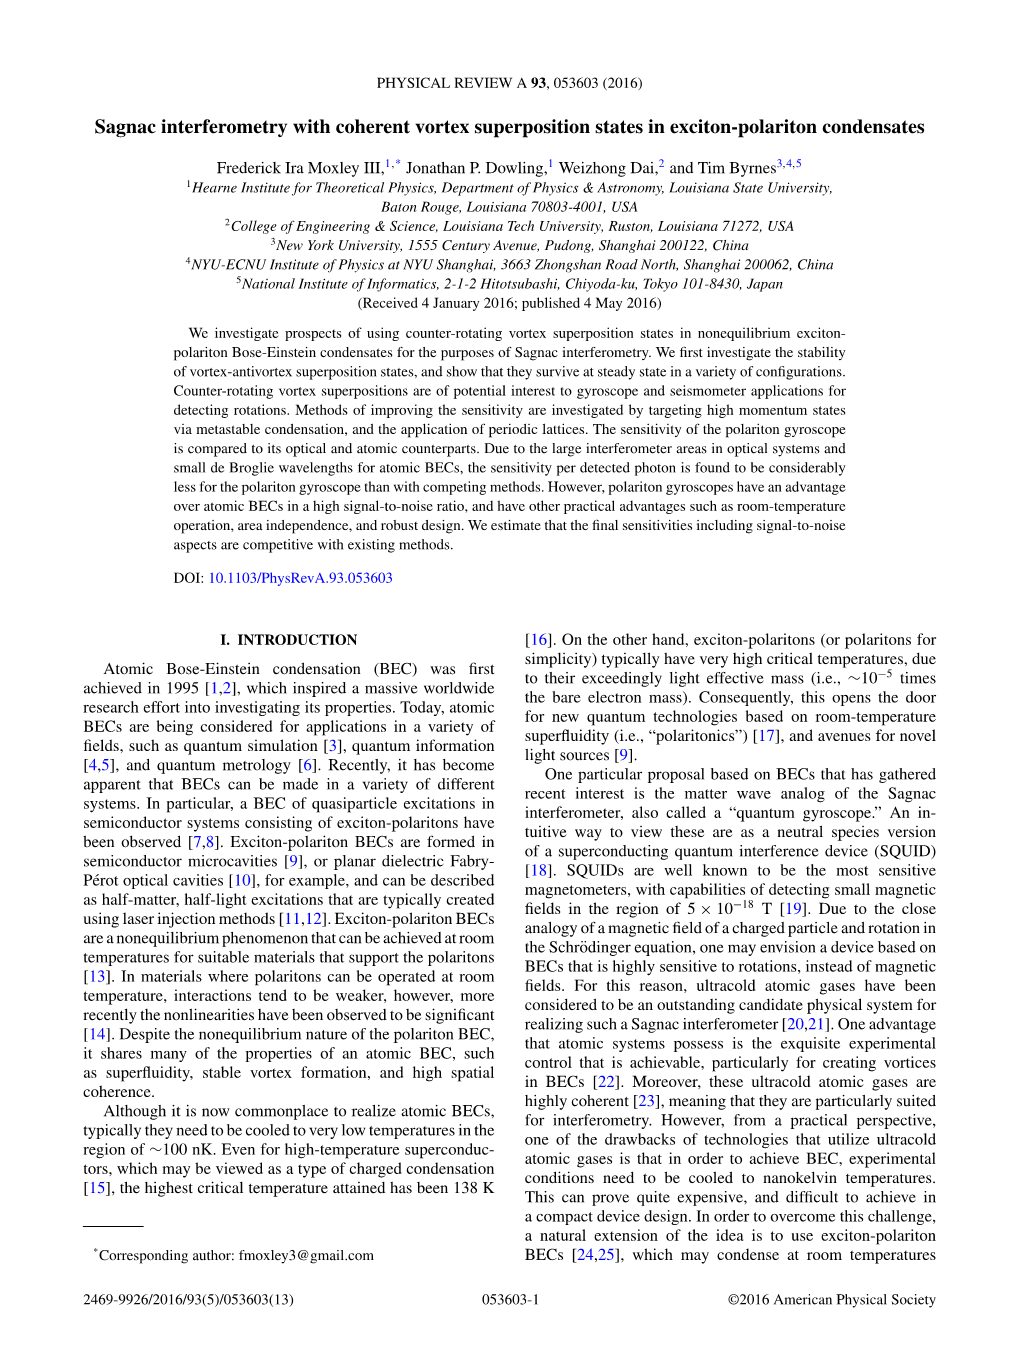 Sagnac Interferometry with Coherent Vortex Superposition States in Exciton-Polariton Condensates